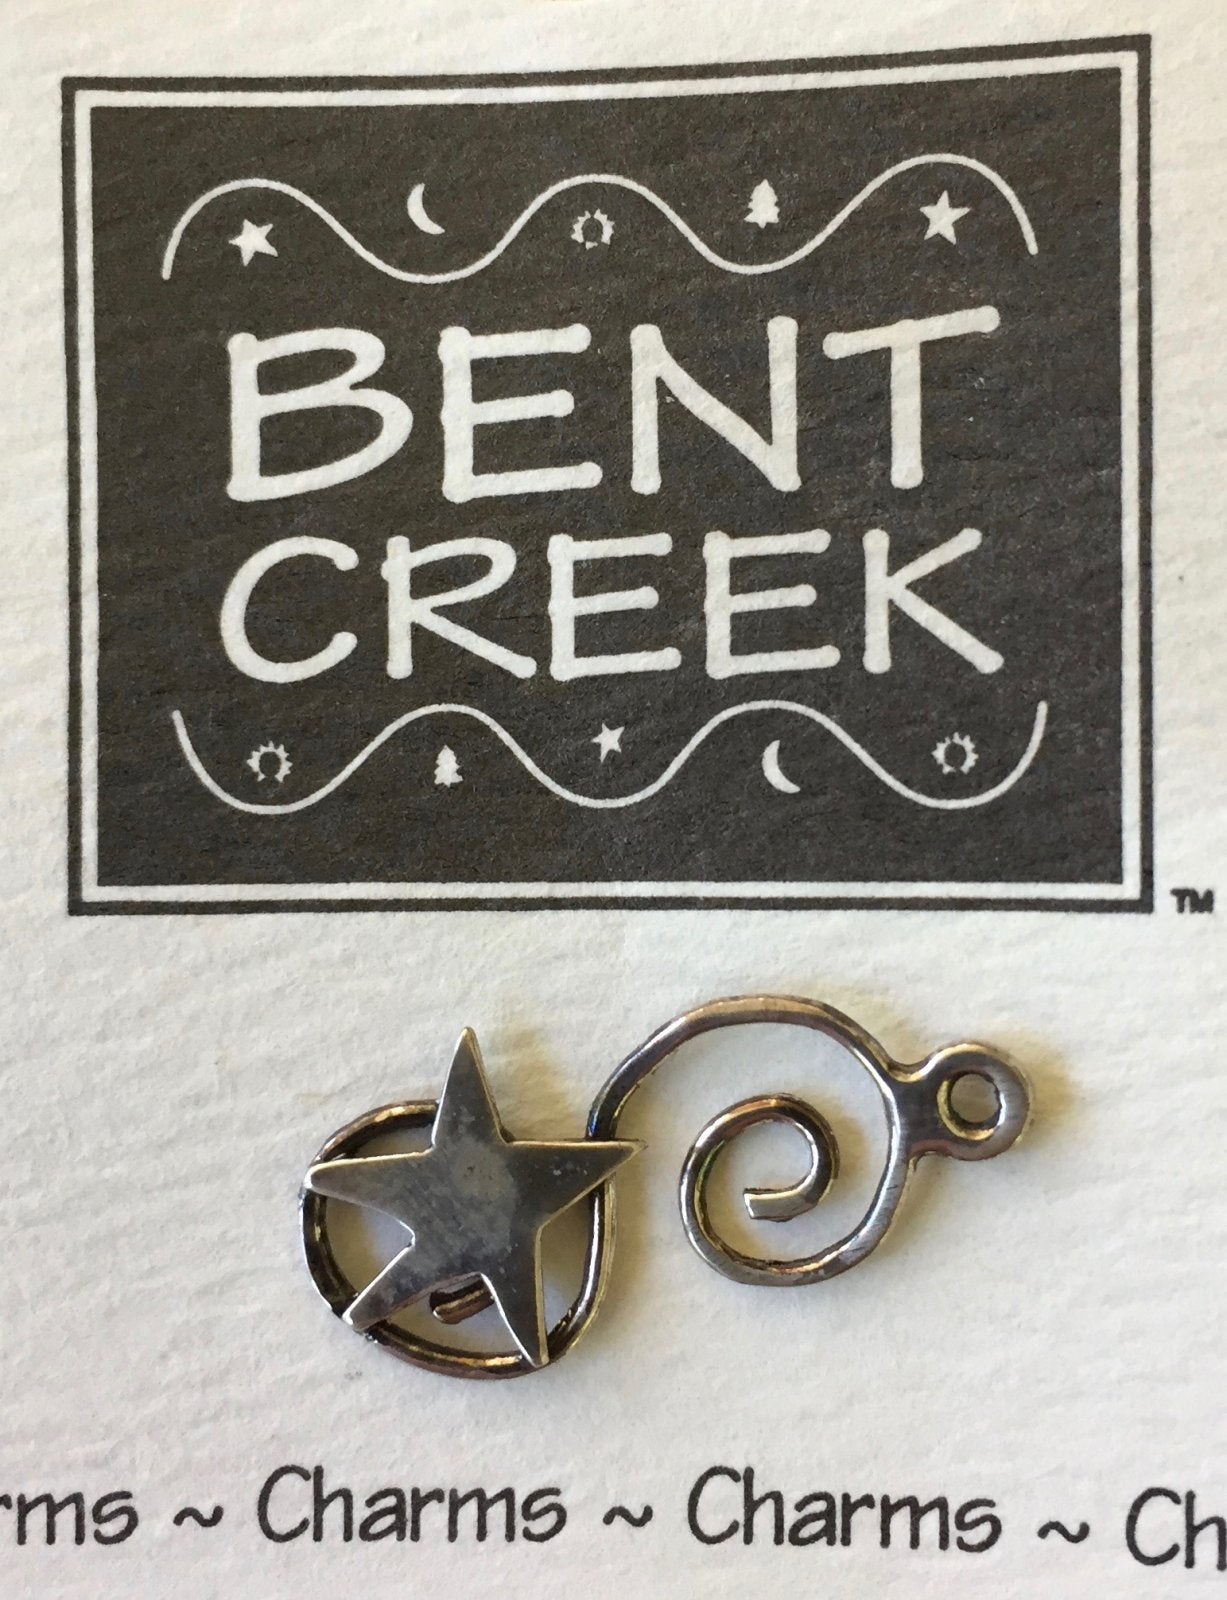 Bent Creek Swirly Star charm